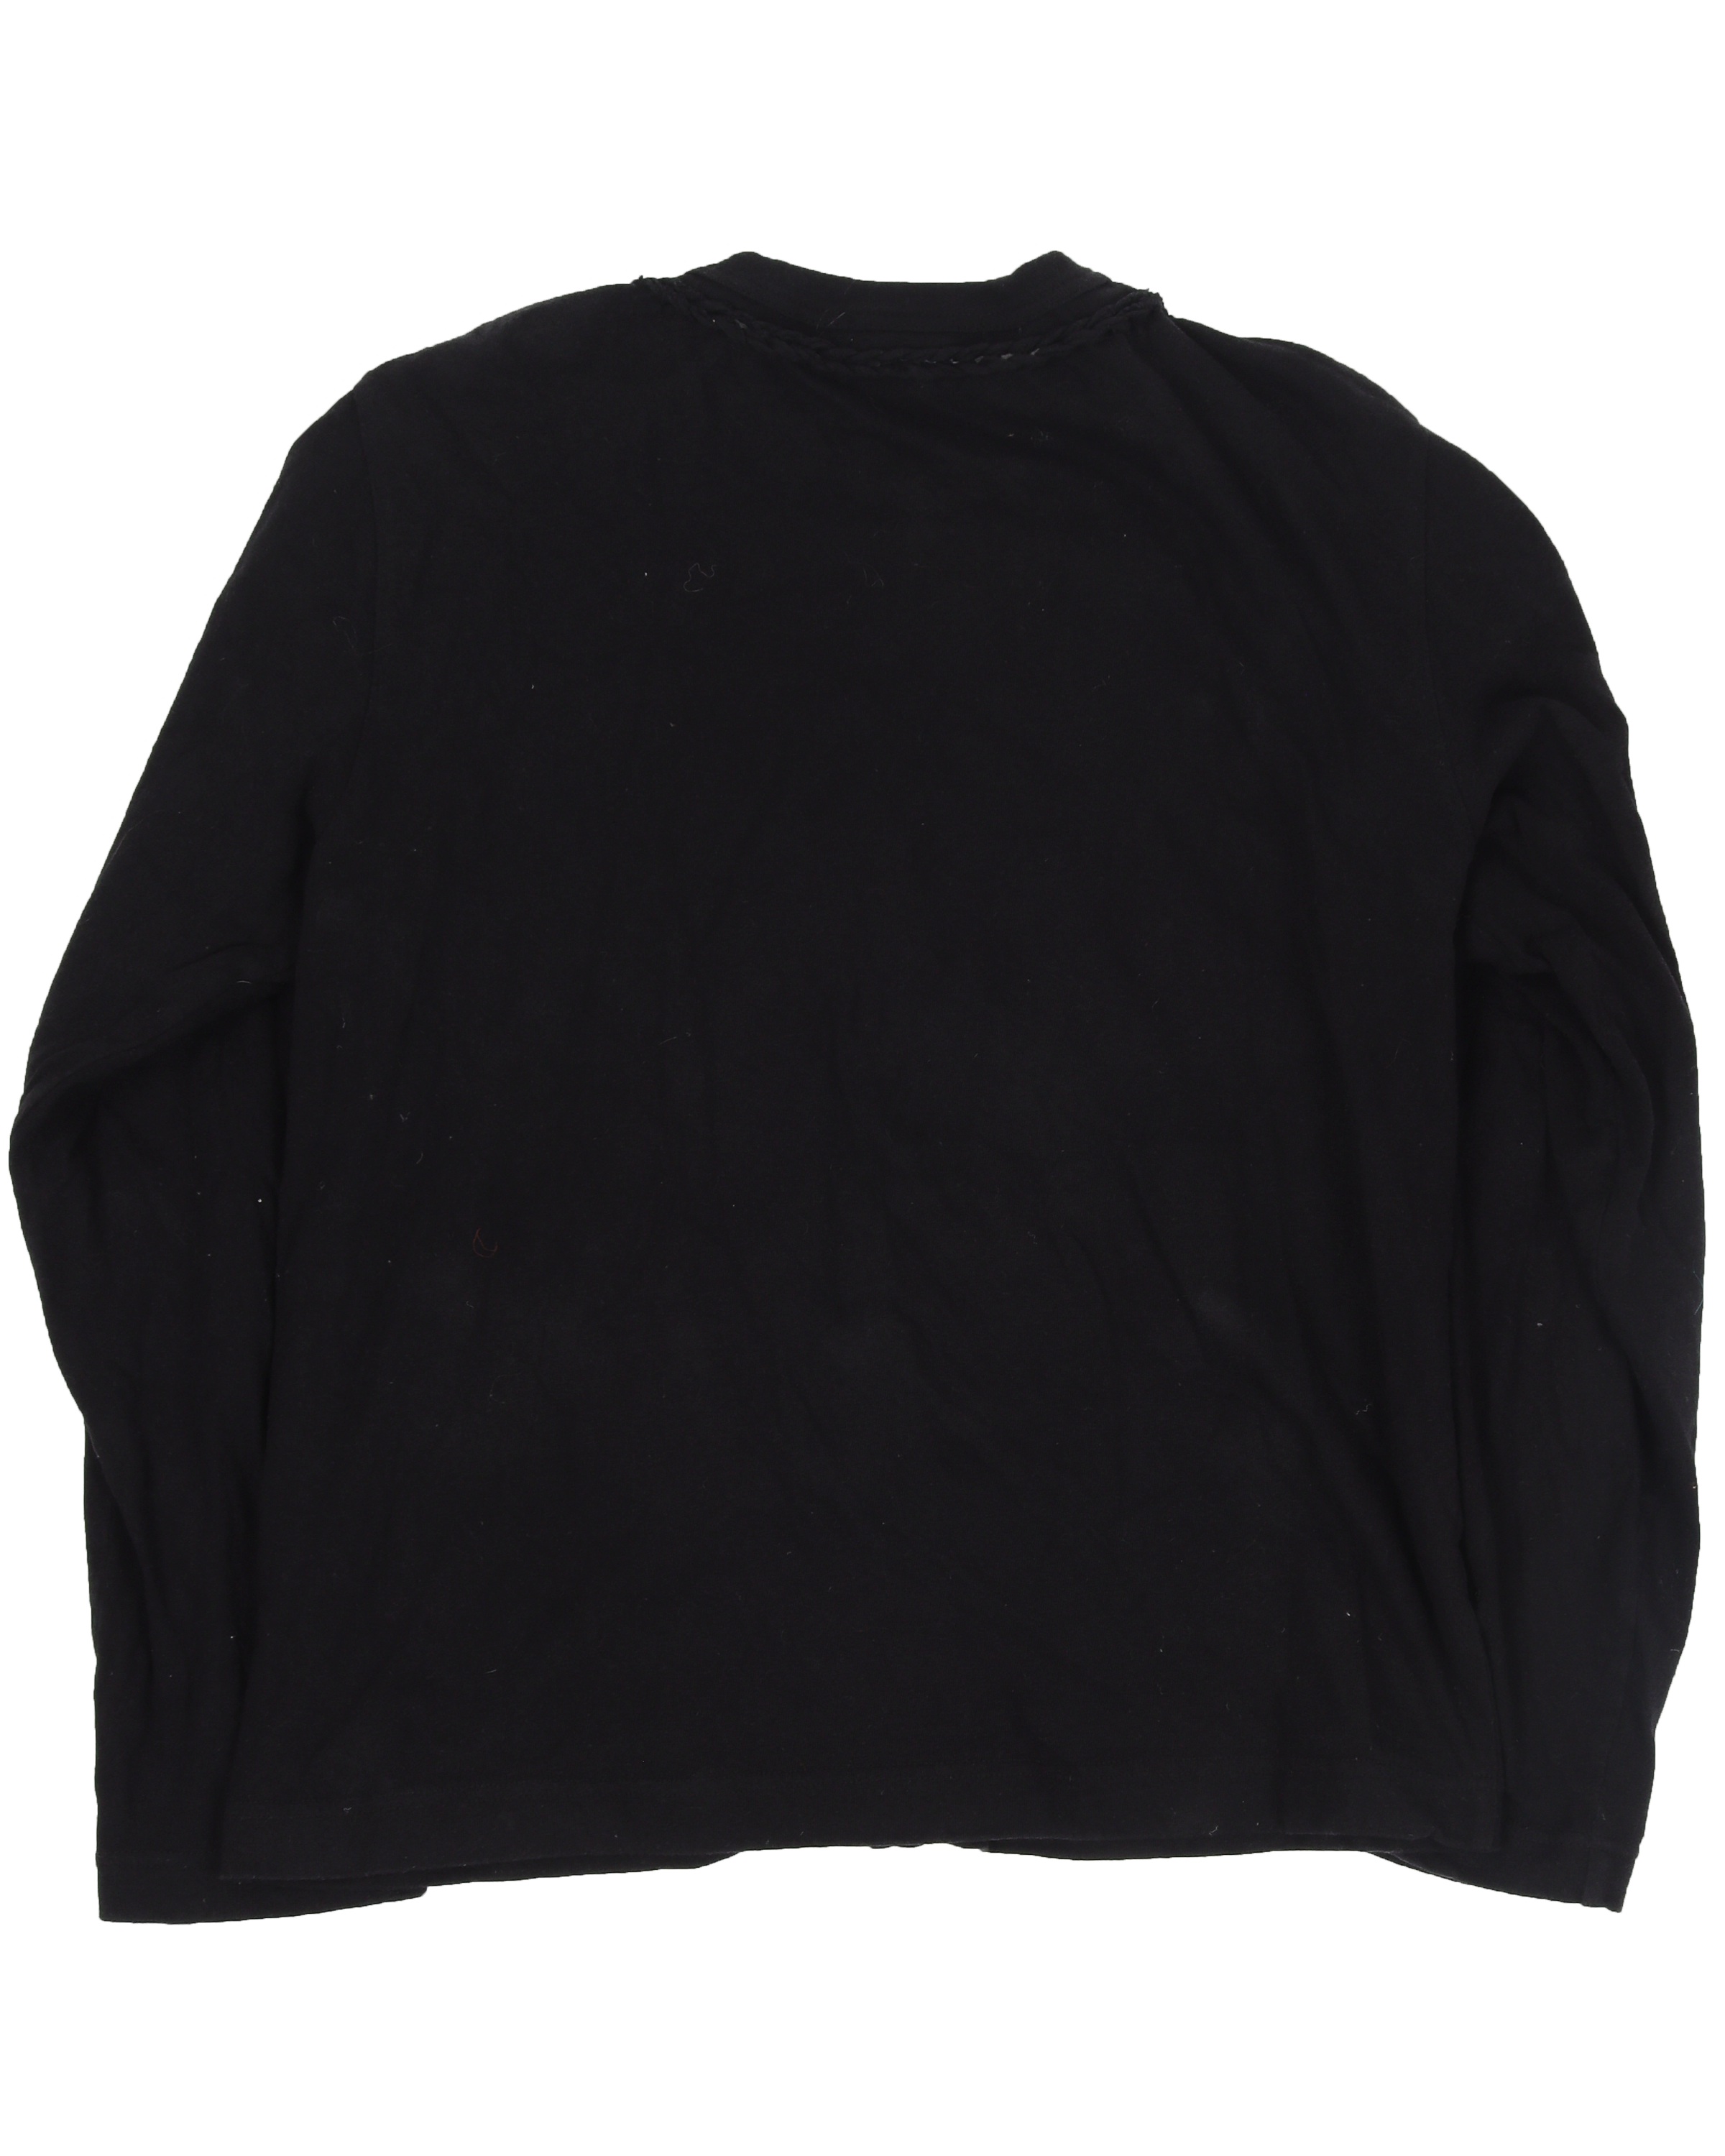 Braided Black Cardigan Sweater 2004 "Noir"